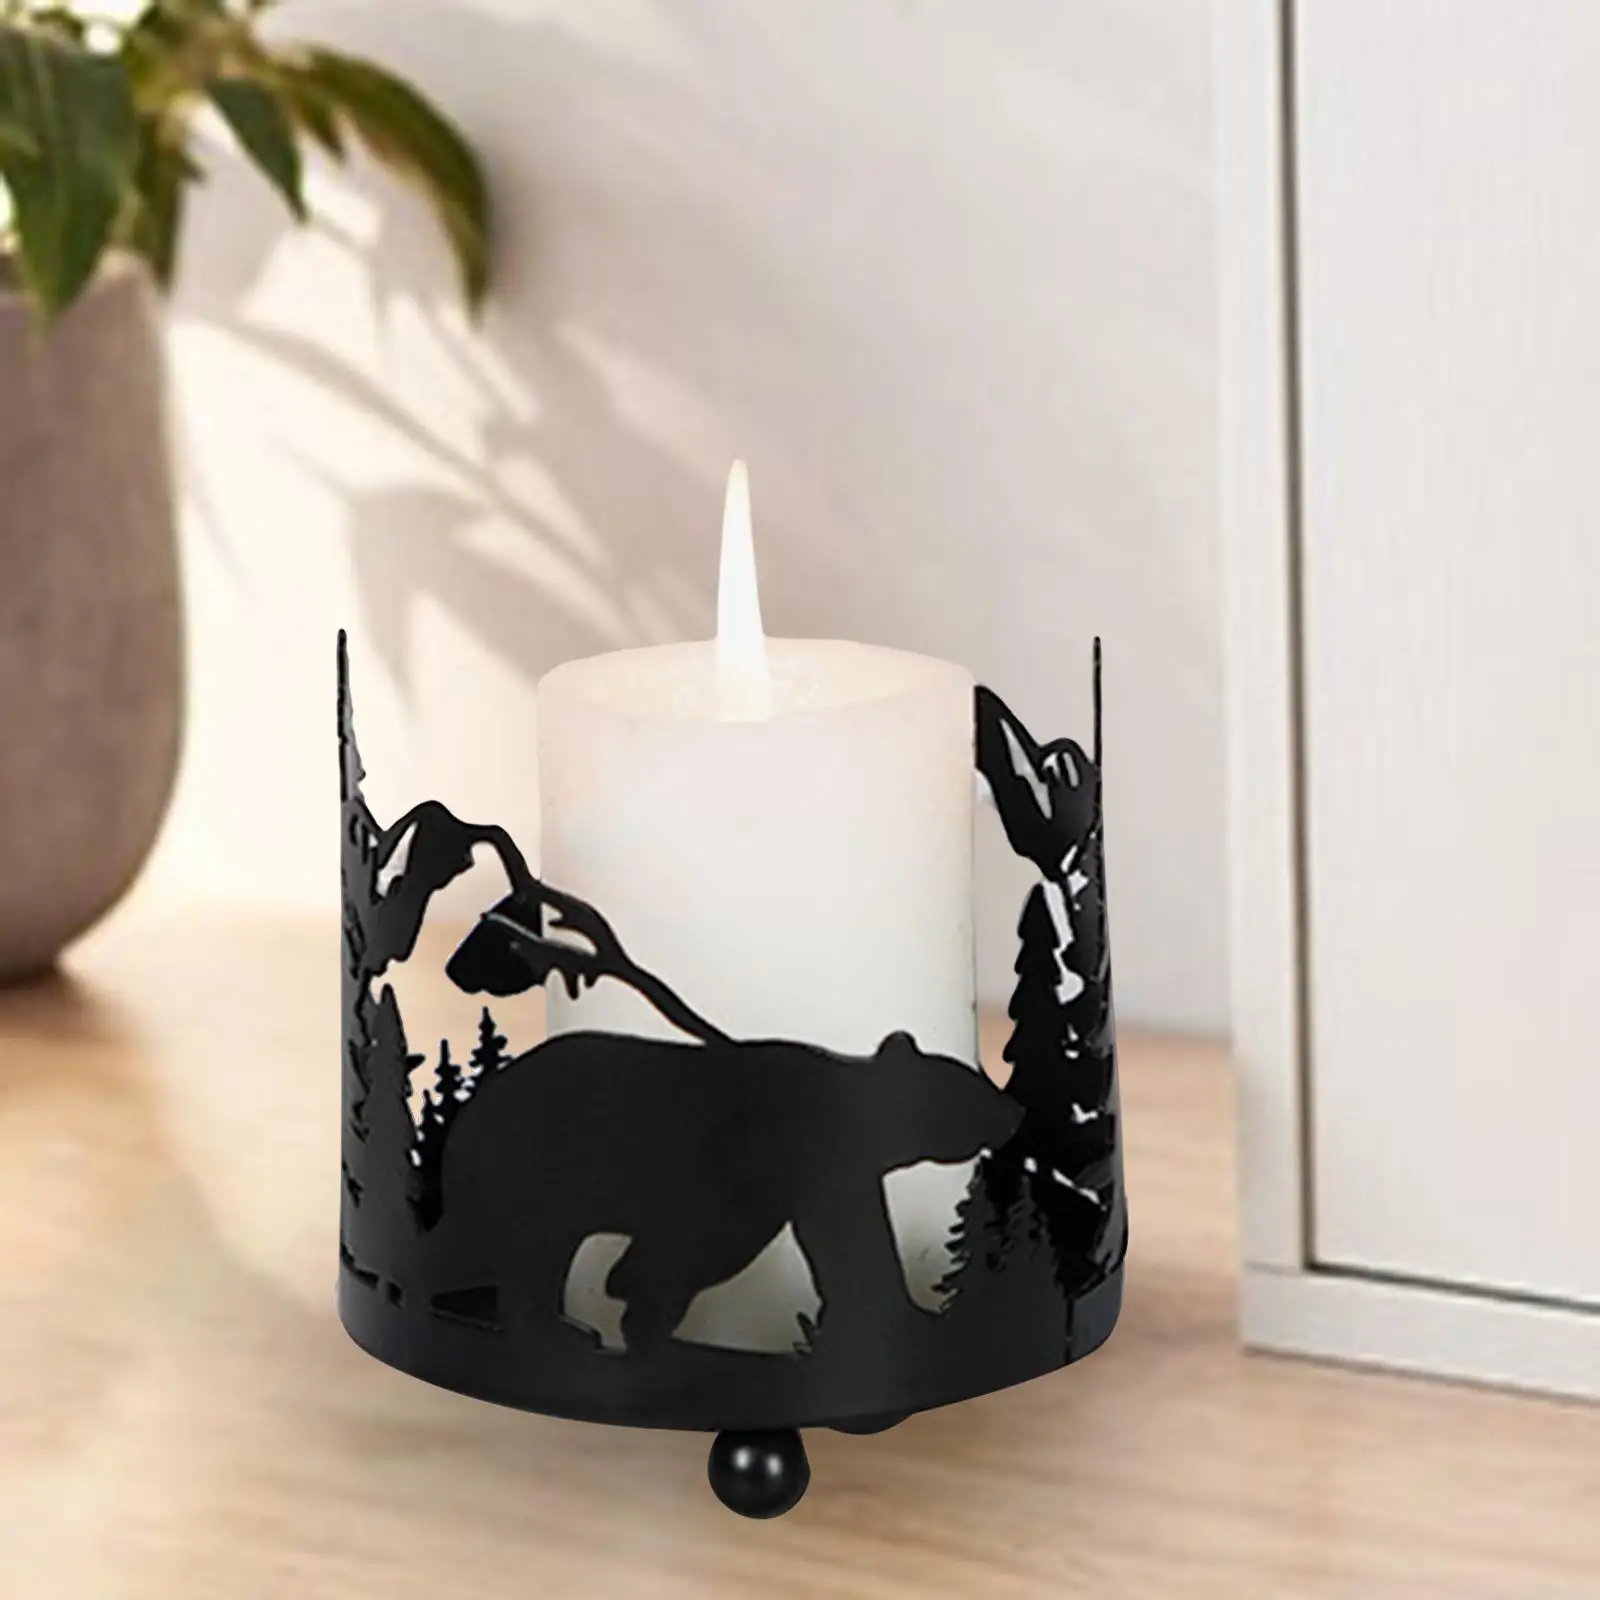 Votive Candle Holder, Candlestick Decorative Romantic Nordic Candleholder Candelabra for Table Party Desktop Decor Gift